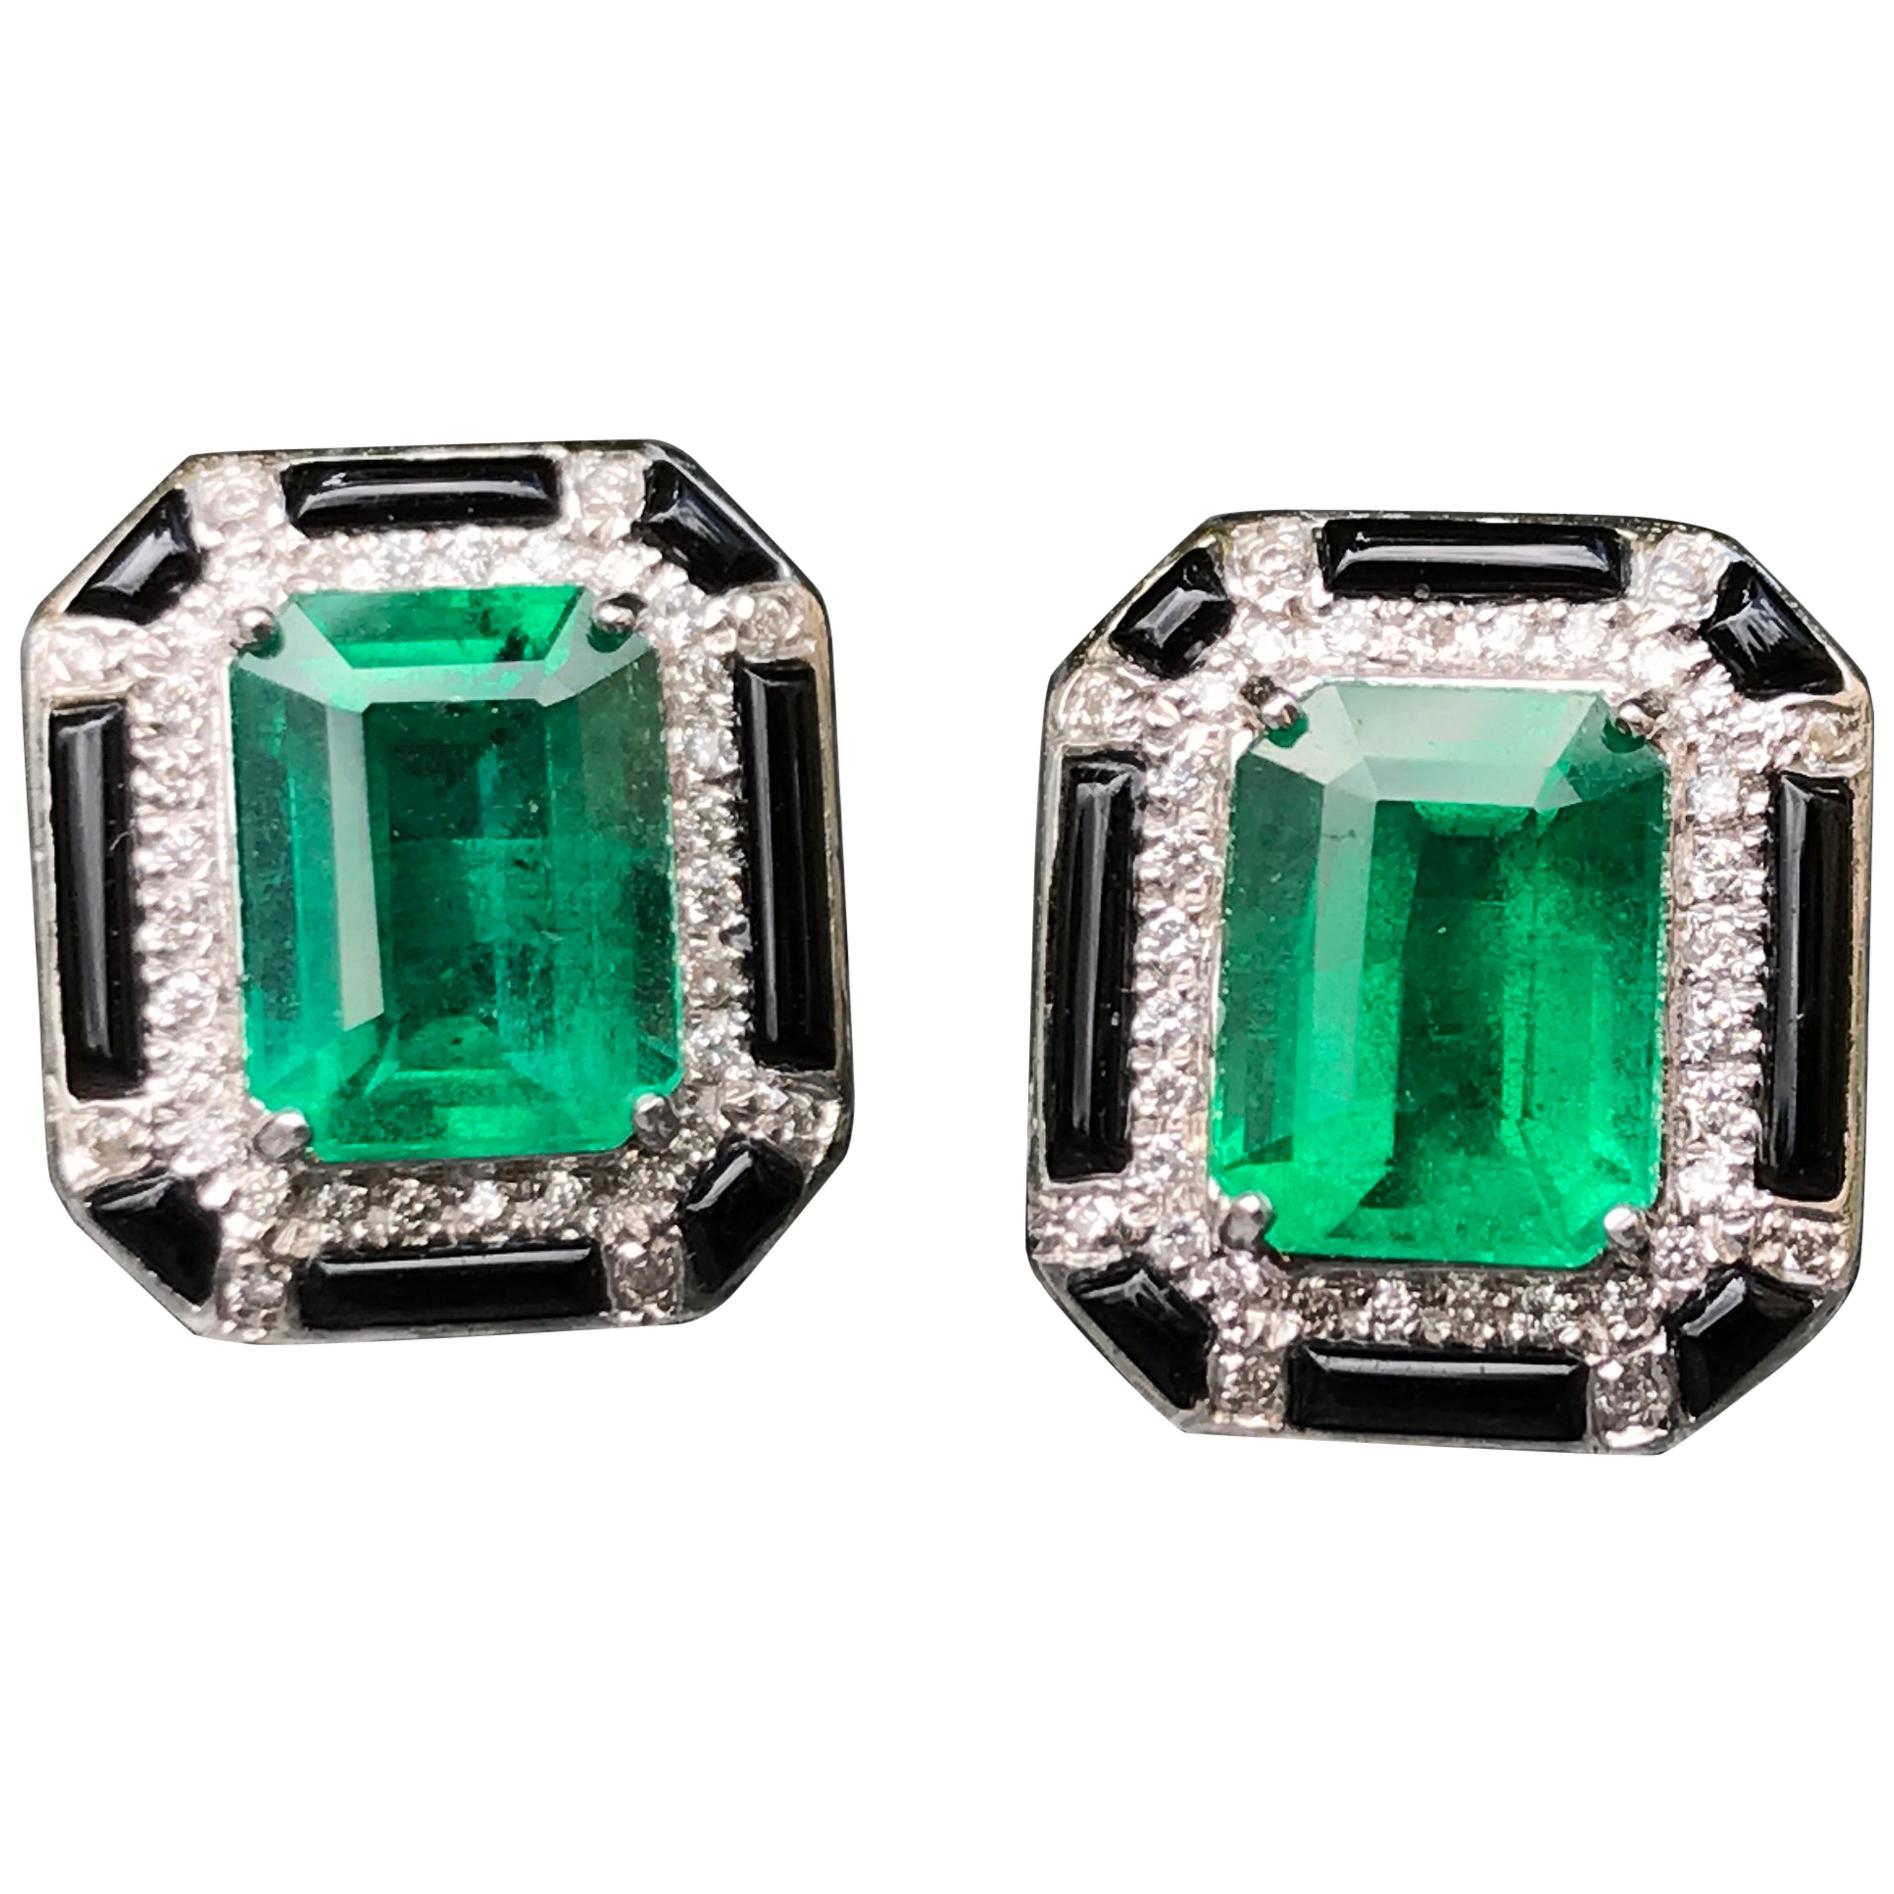 3.85 Carat Zambian Emerald and Diamond Stud Earring